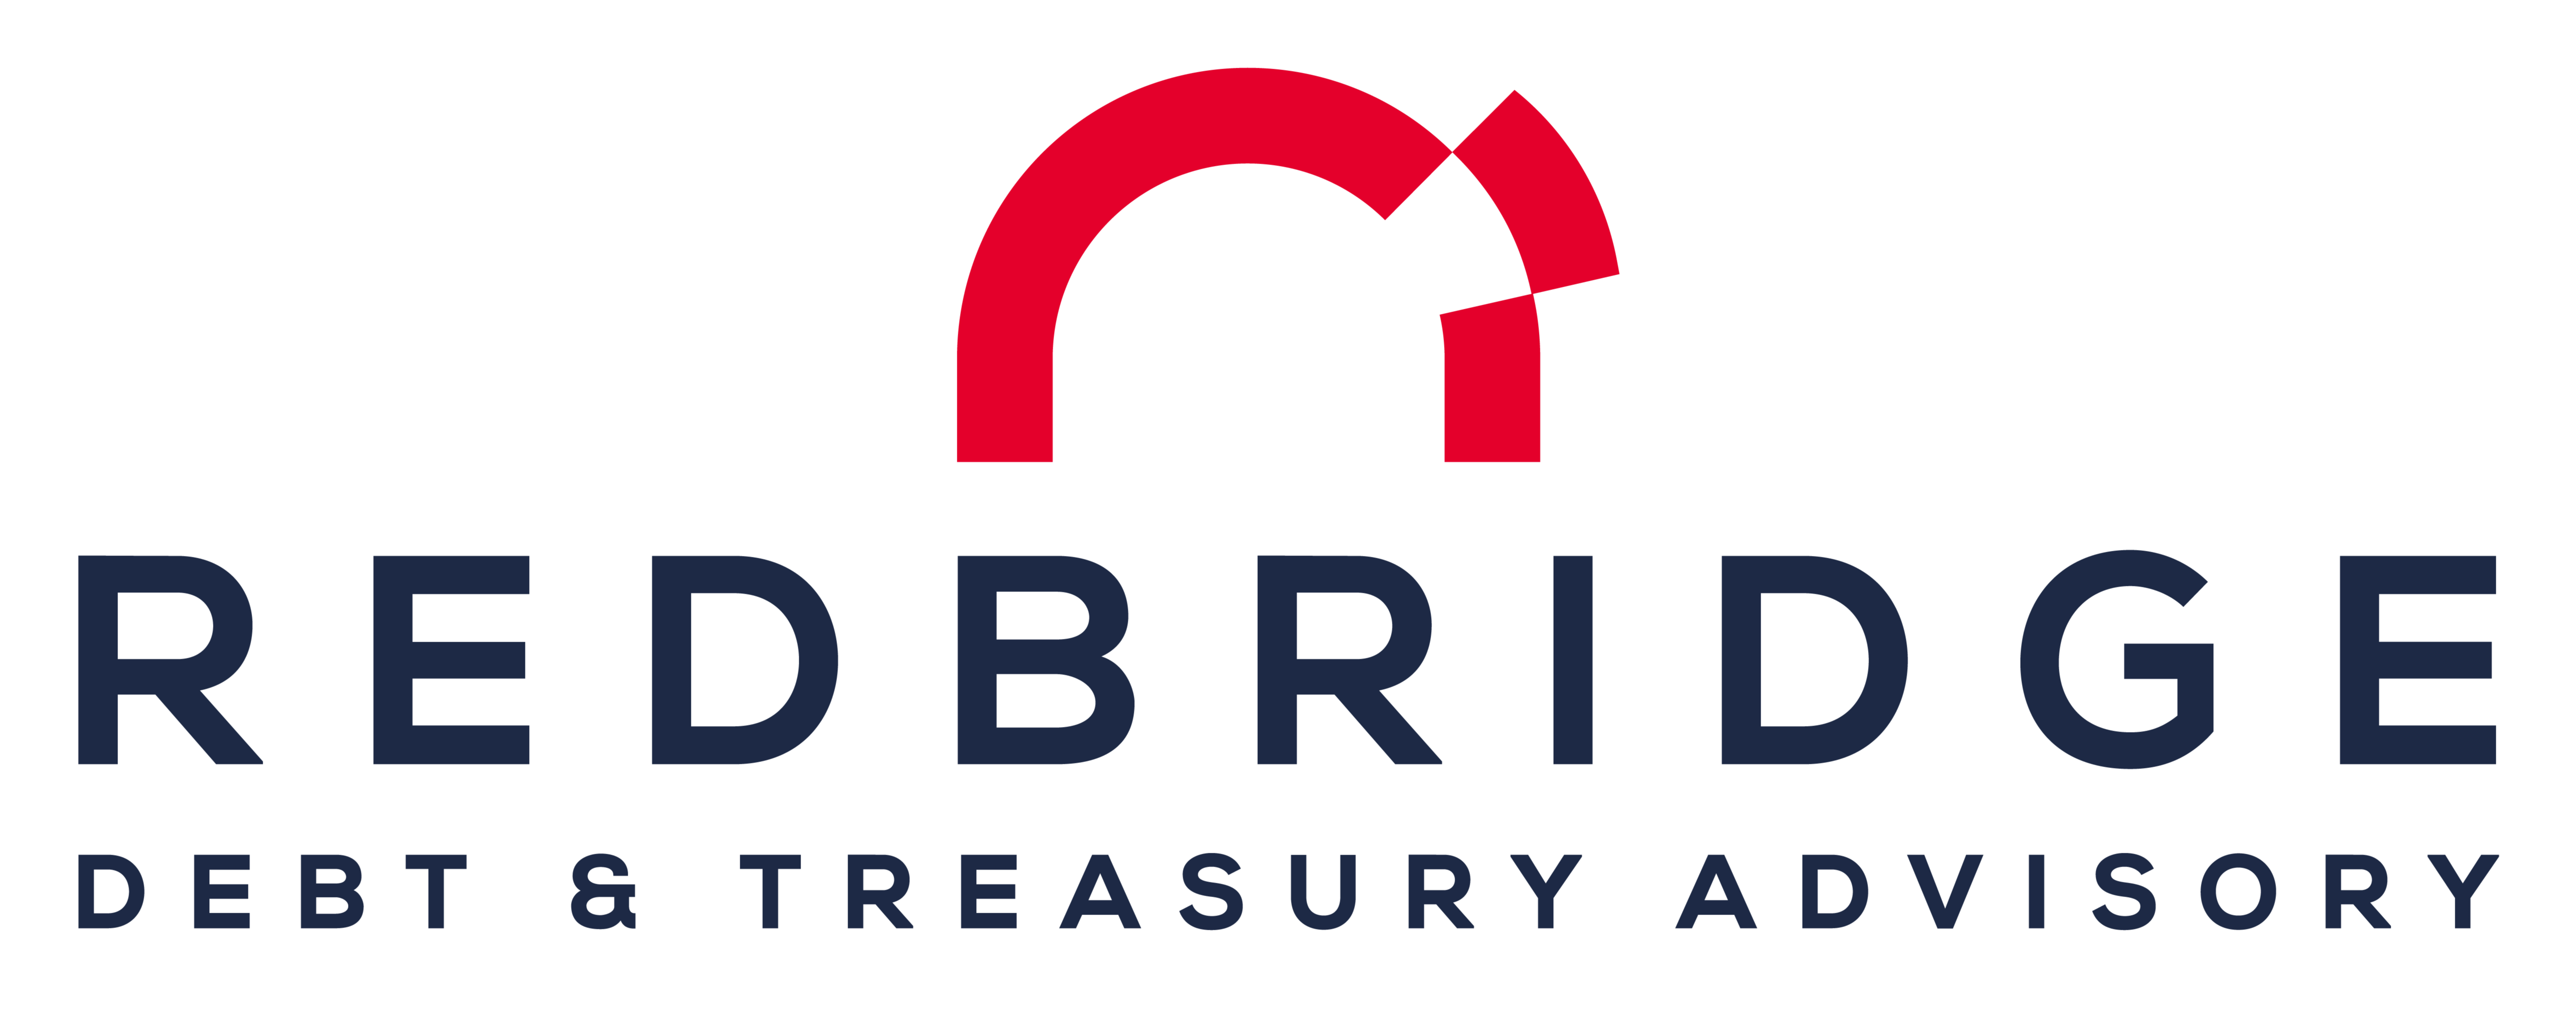 Redbridge Debt & Treasury Advisory